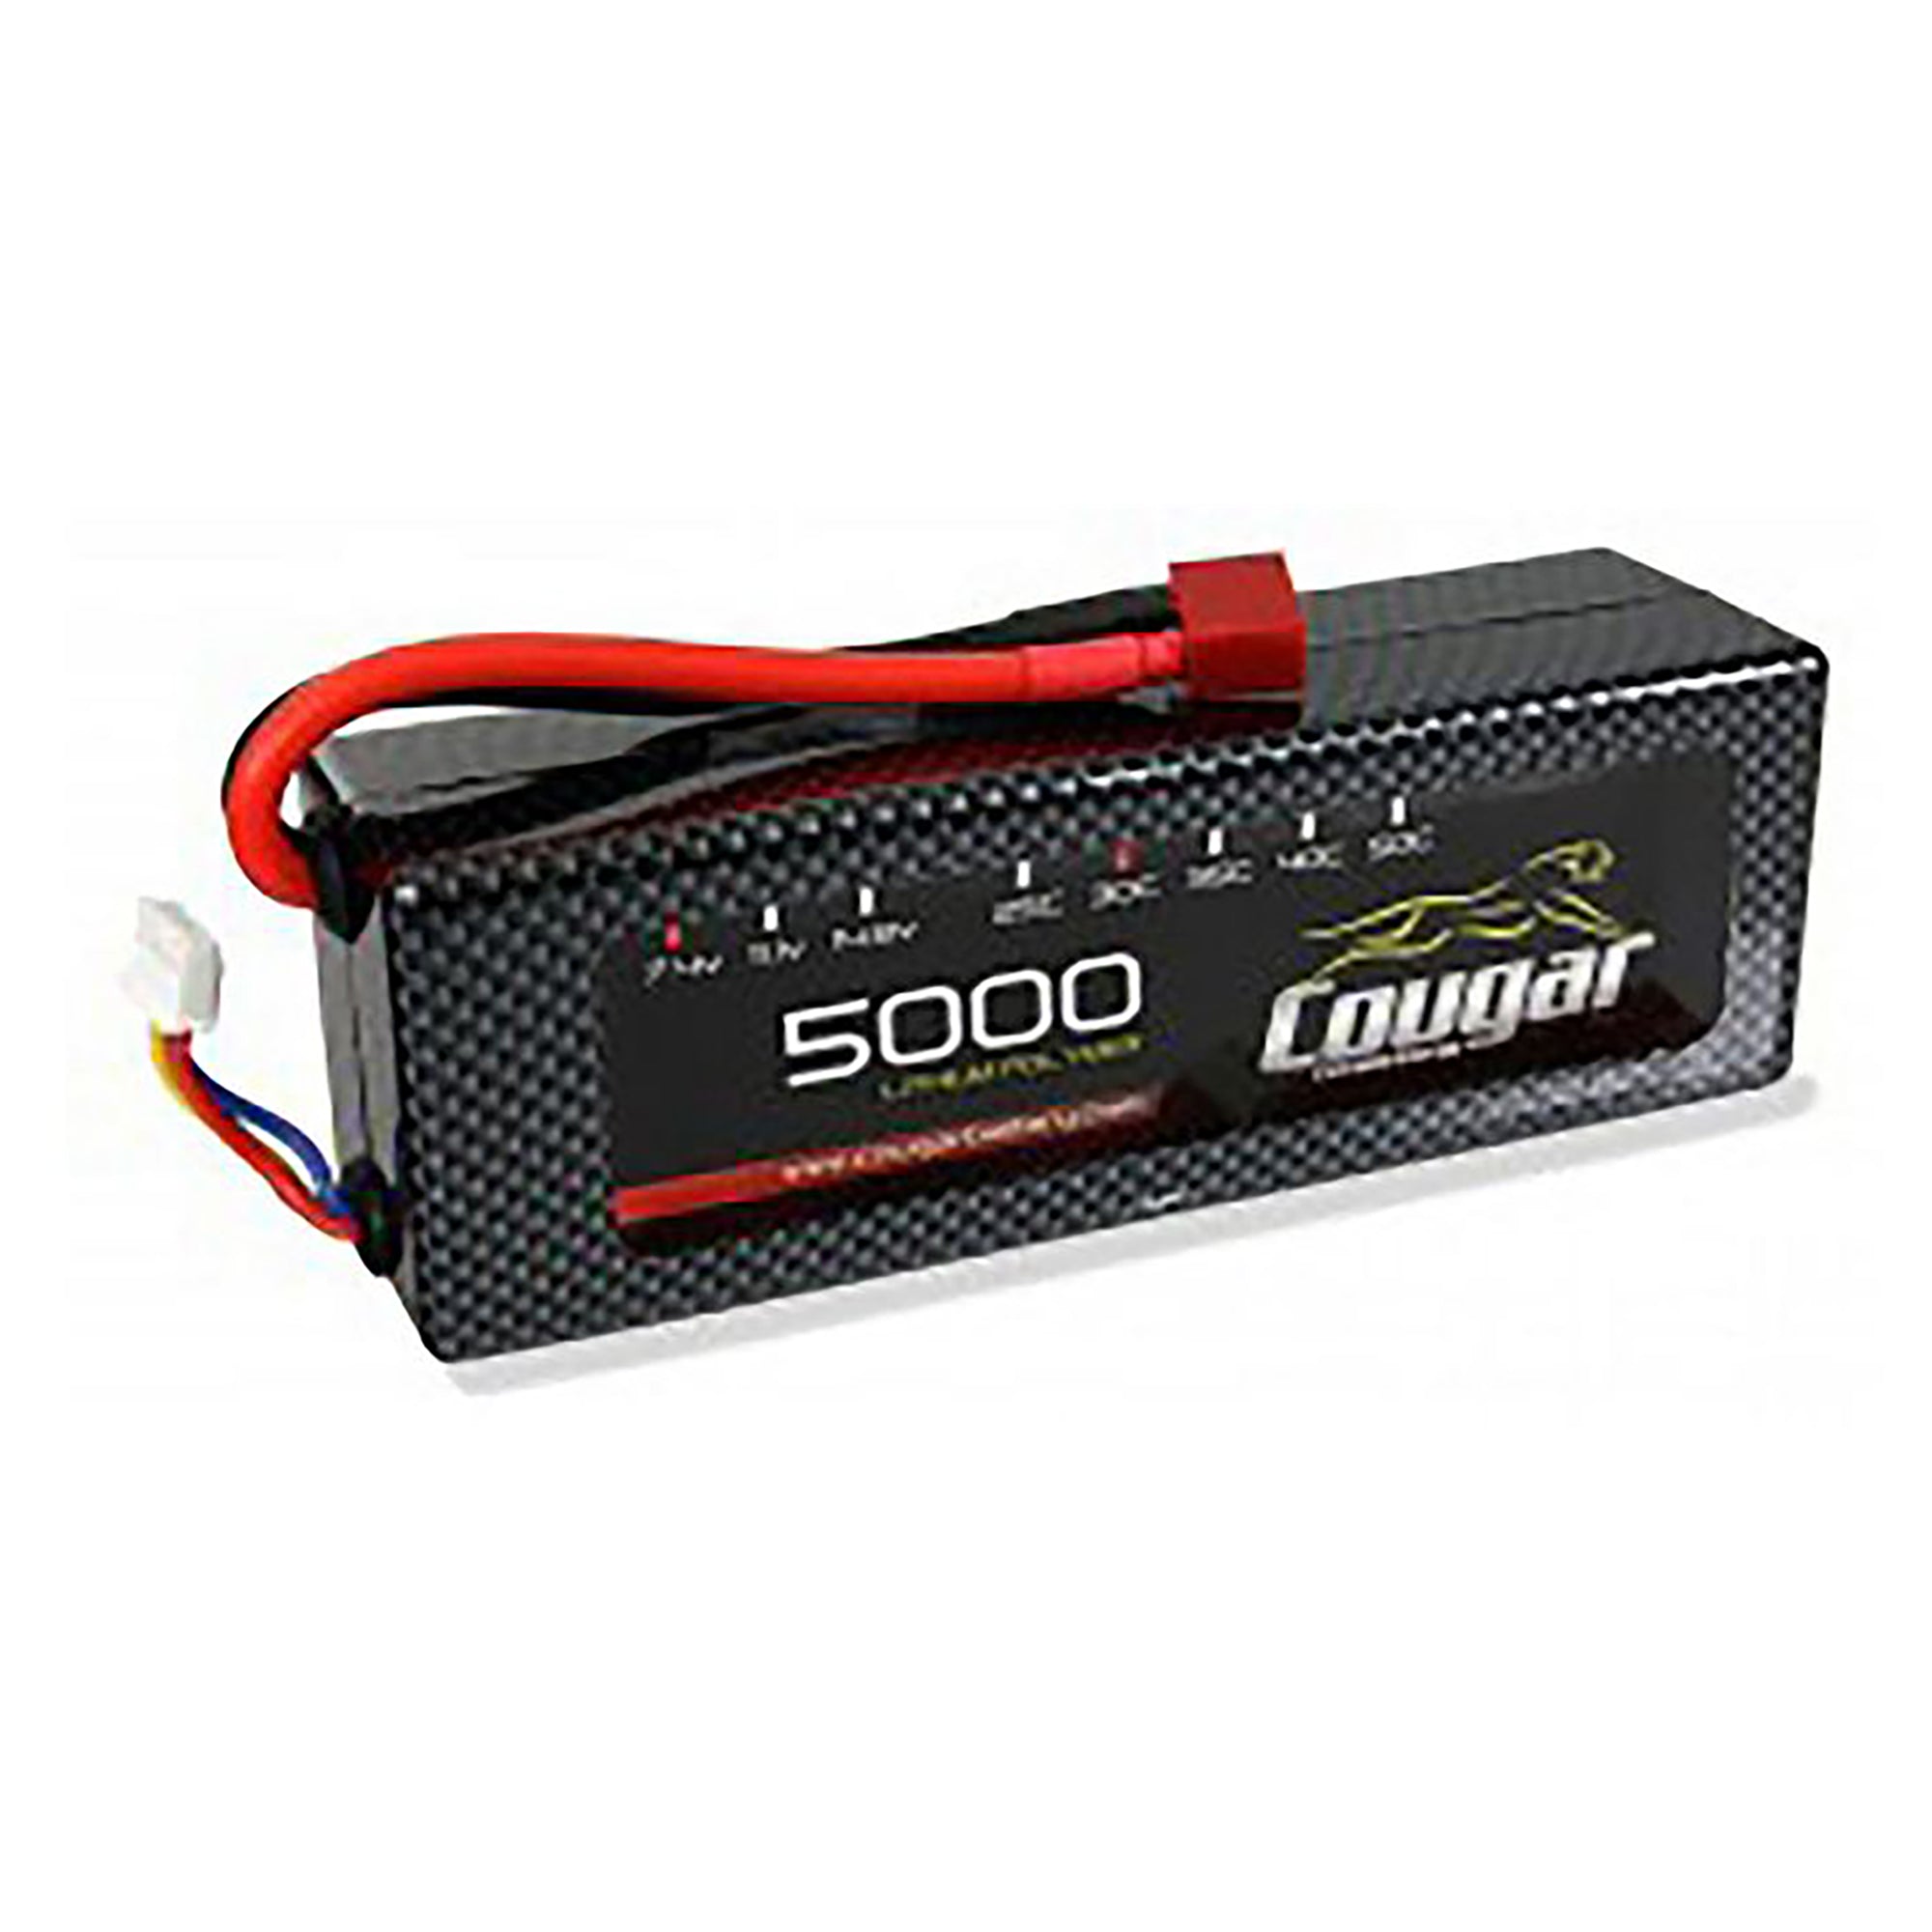 Cougar 5000mAh 7.4v 2S 30C Hard Case LiPo Battery